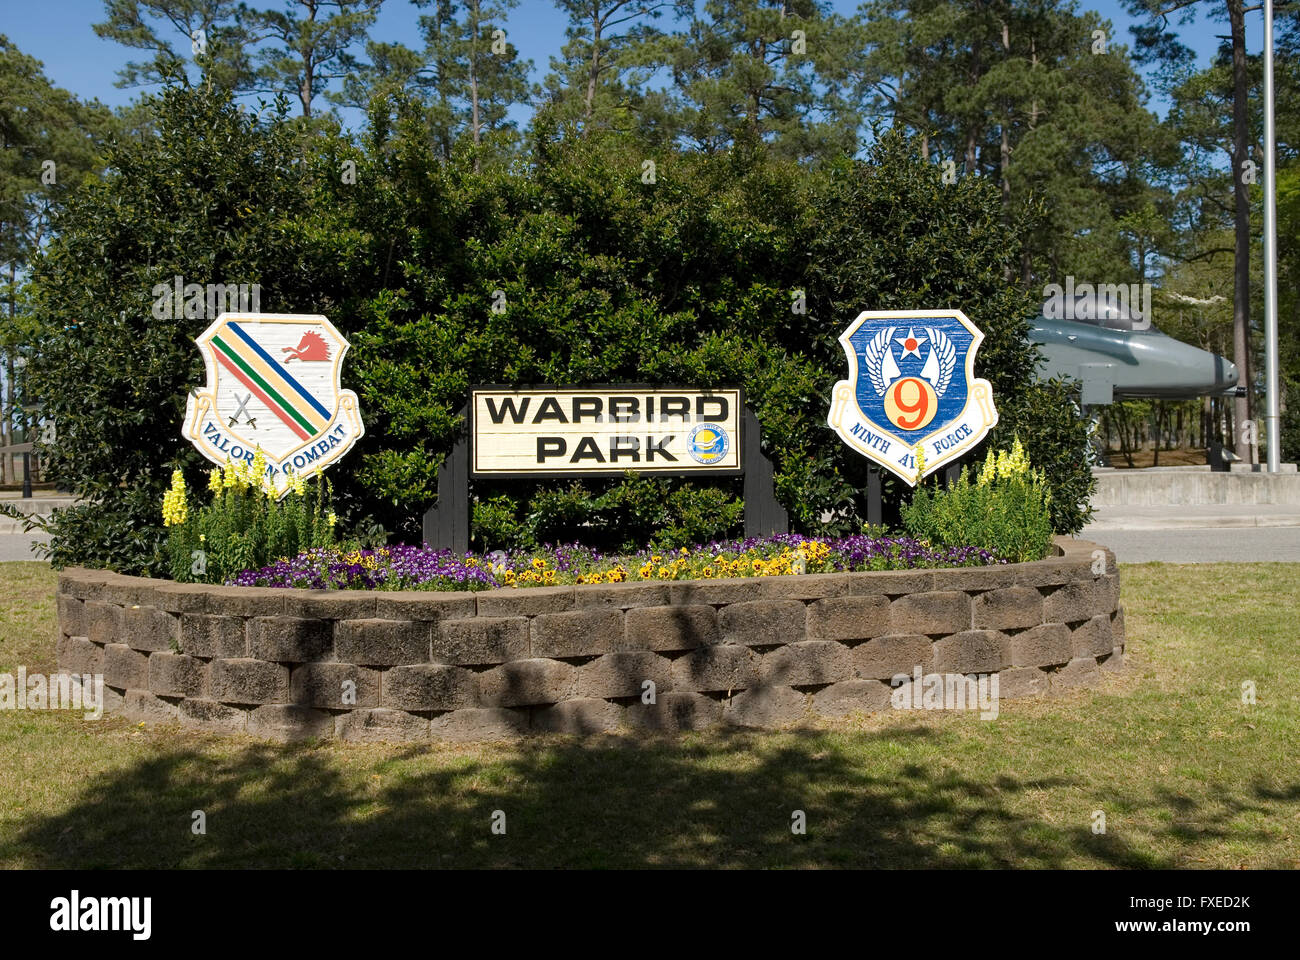 Warbird Park sign Myrtle Beach SC USA Stock Photo